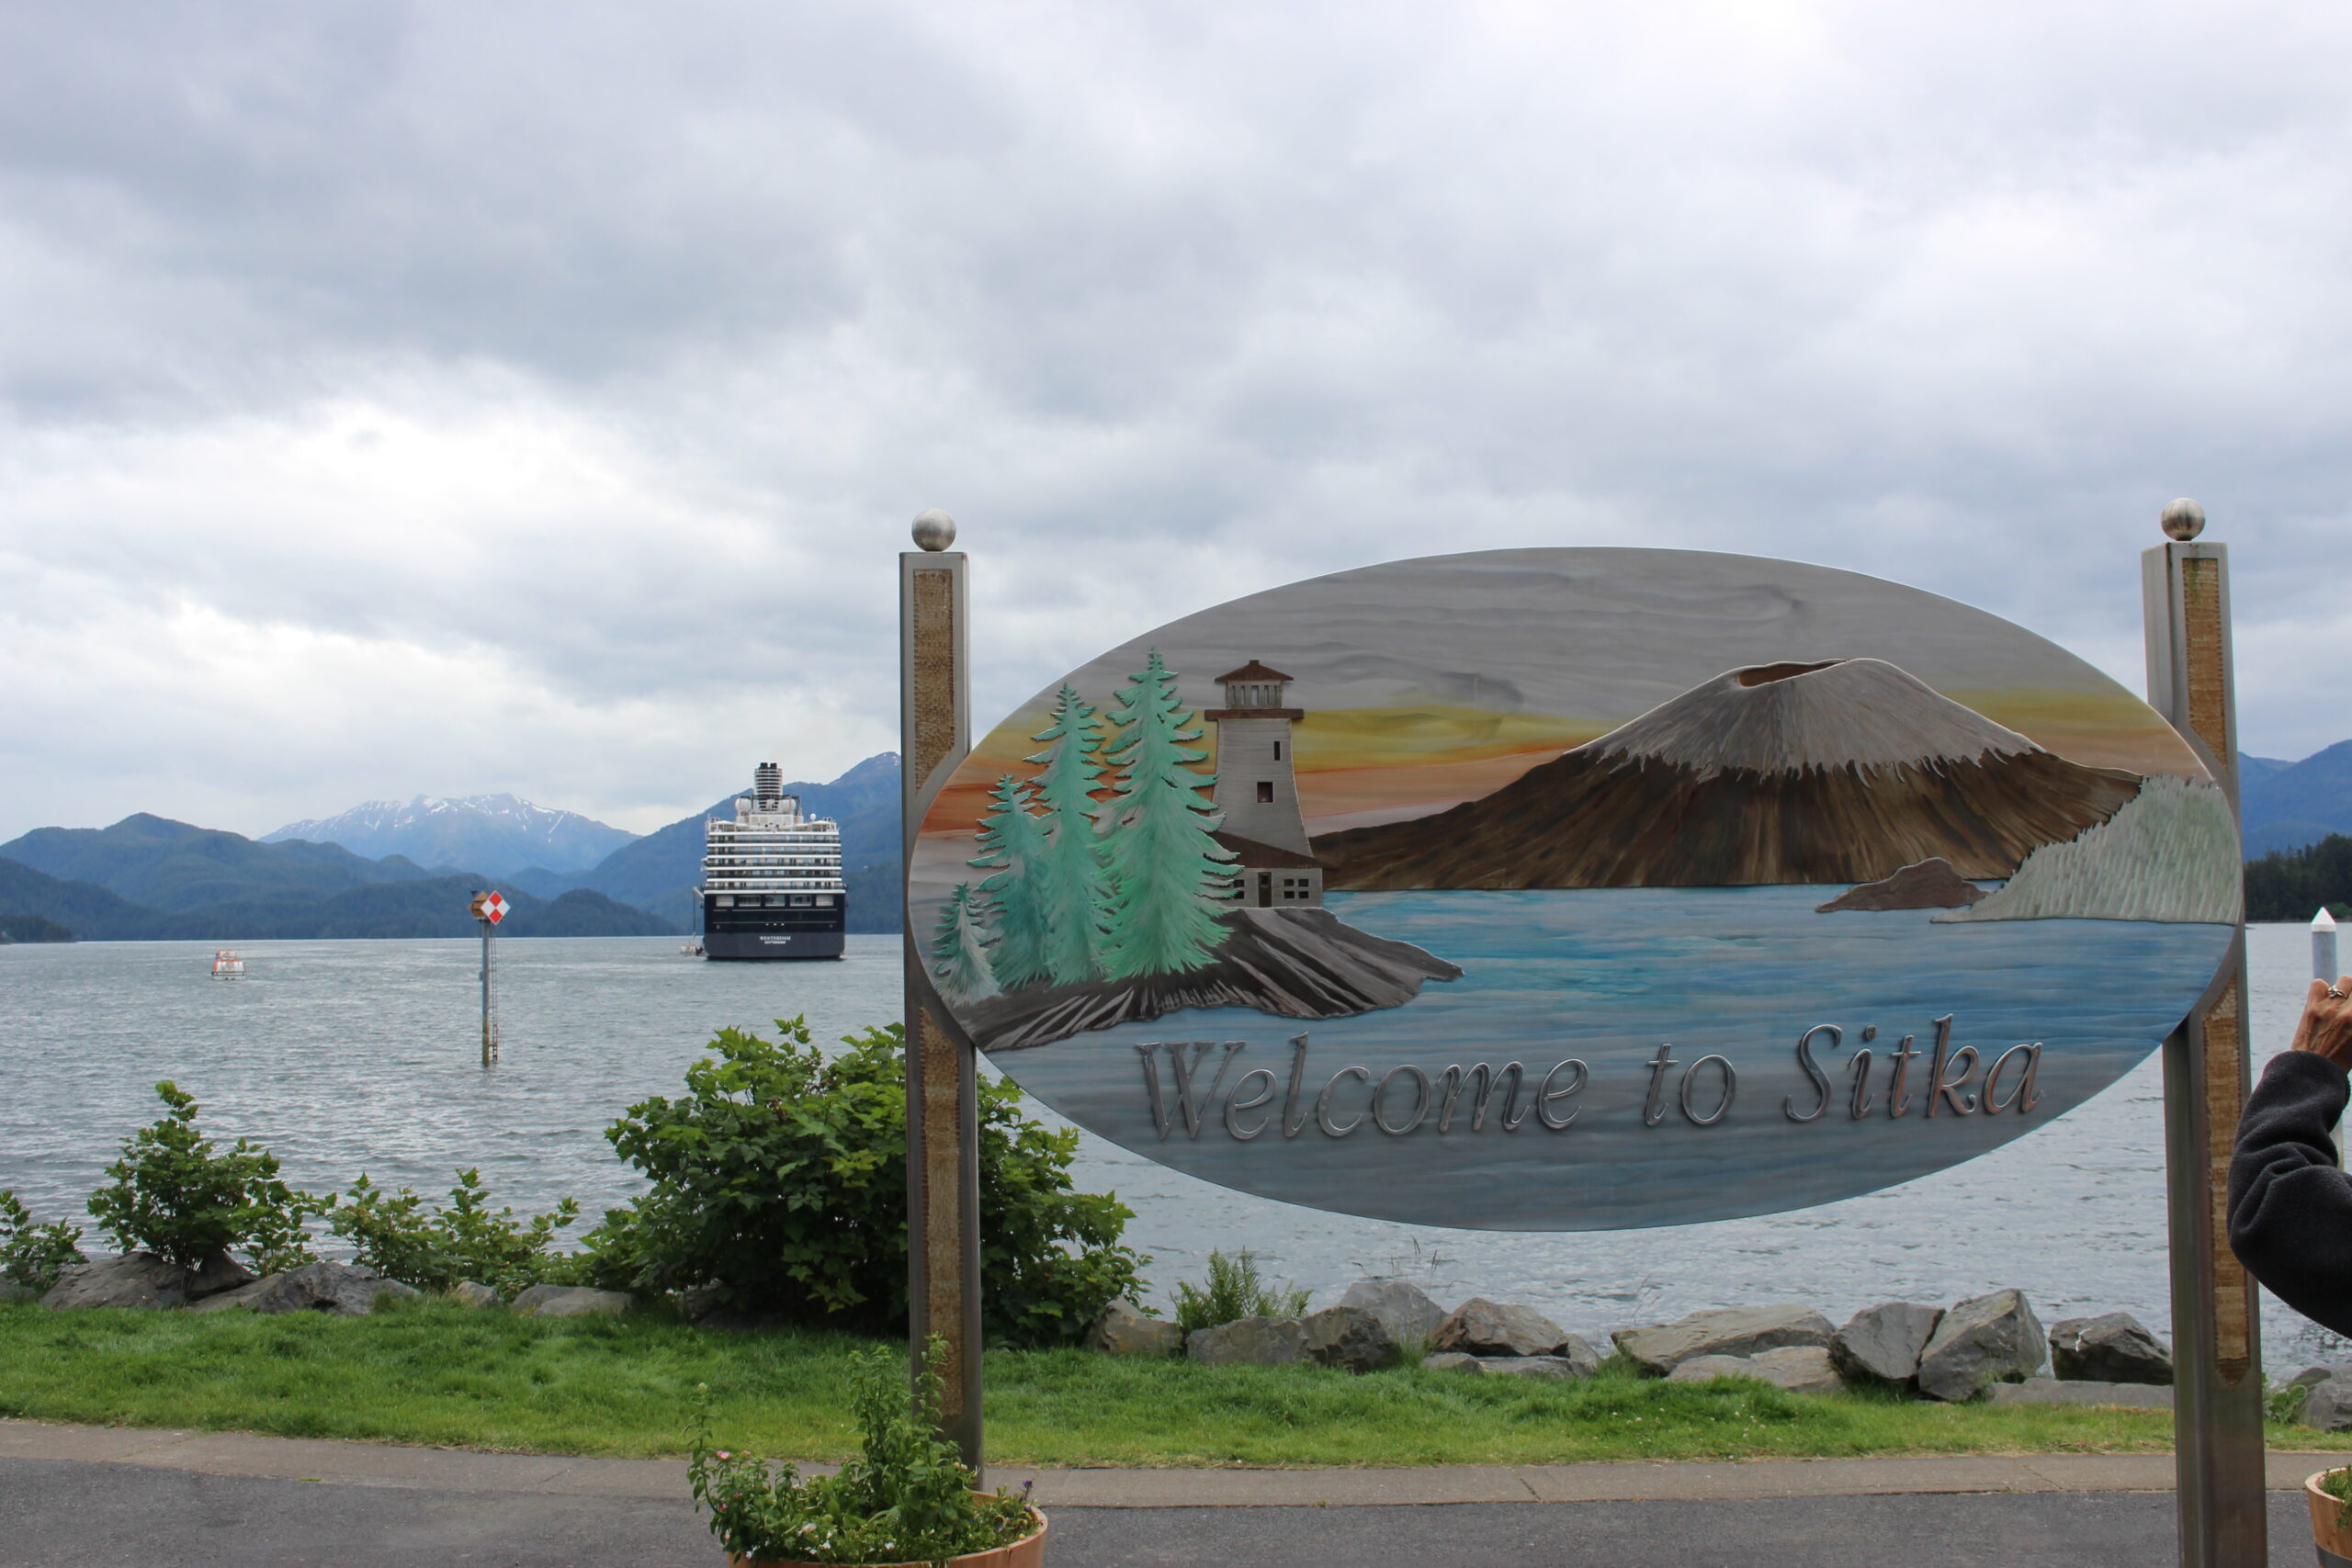 Alaskan Cruise - Holland America